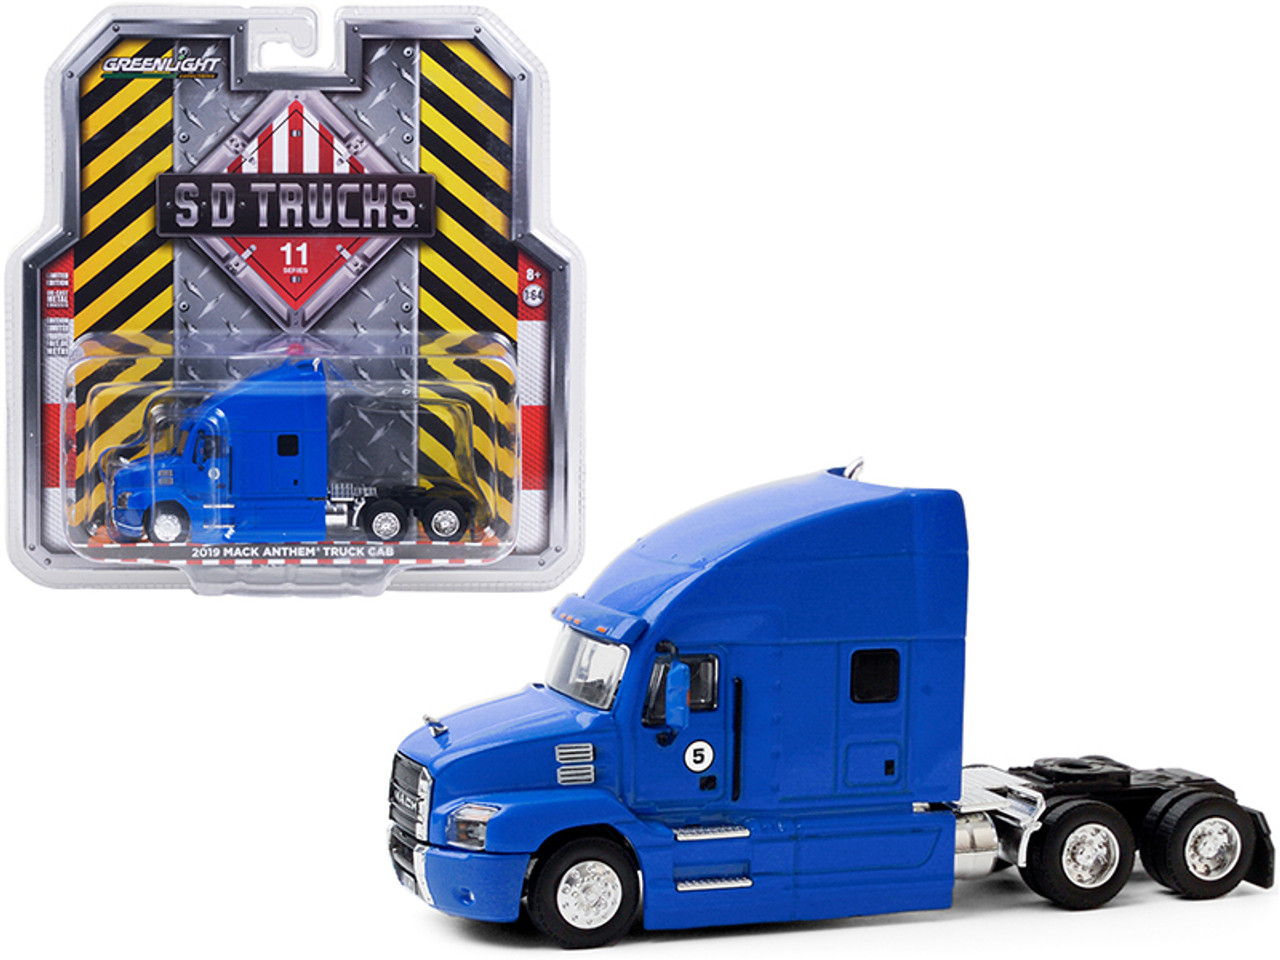 2019 Mack Anthem Truck Cab #5 Blue "S.D. Trucks" Series 11 1/64 Diecast Model by Greenlight